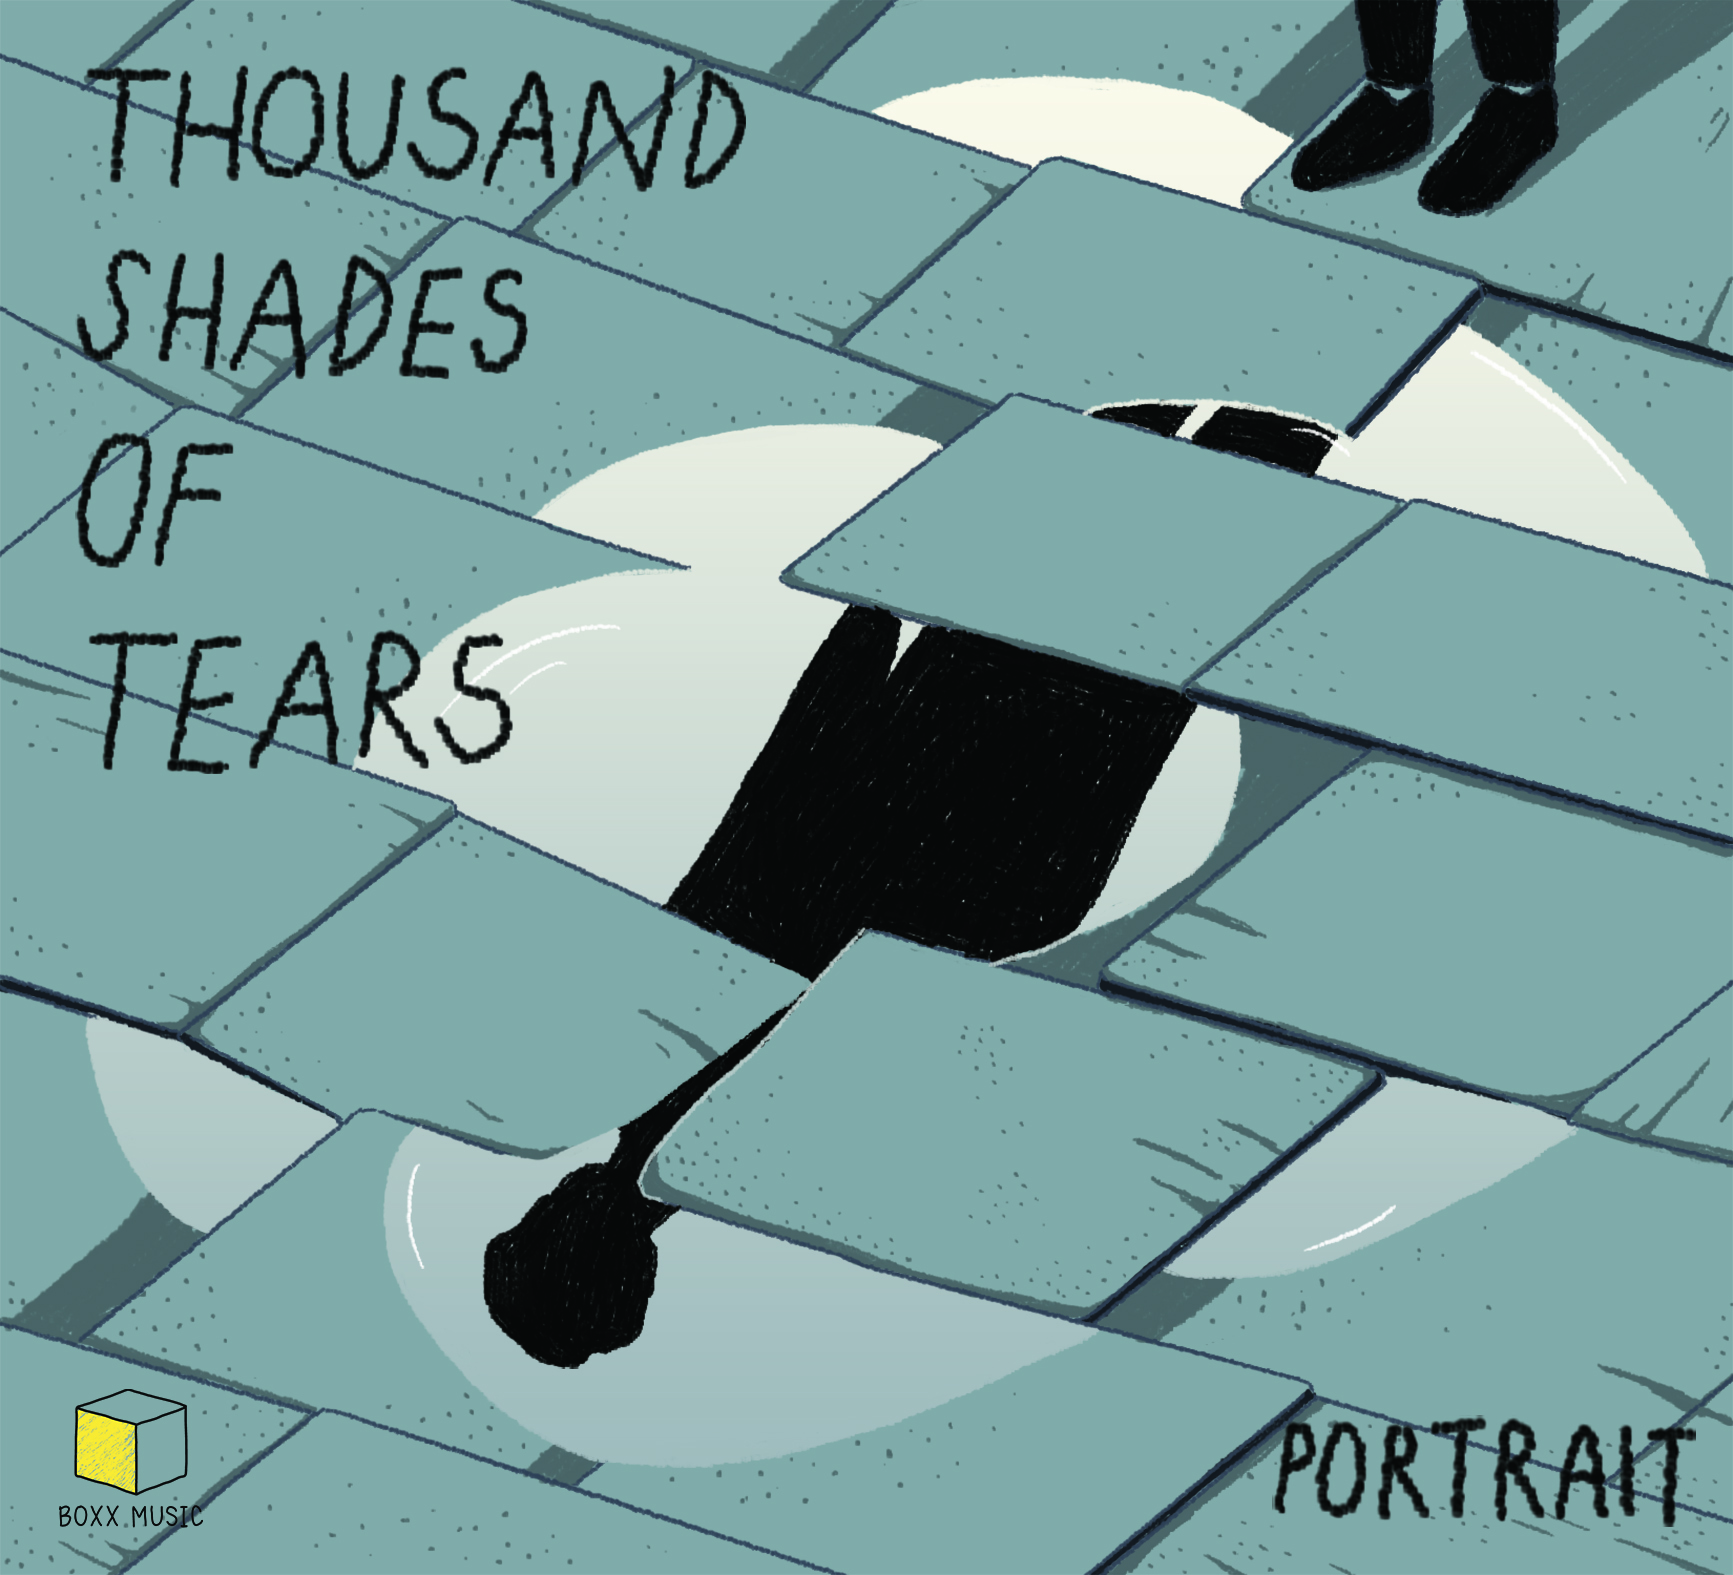 thousand shades of tears - Portrait